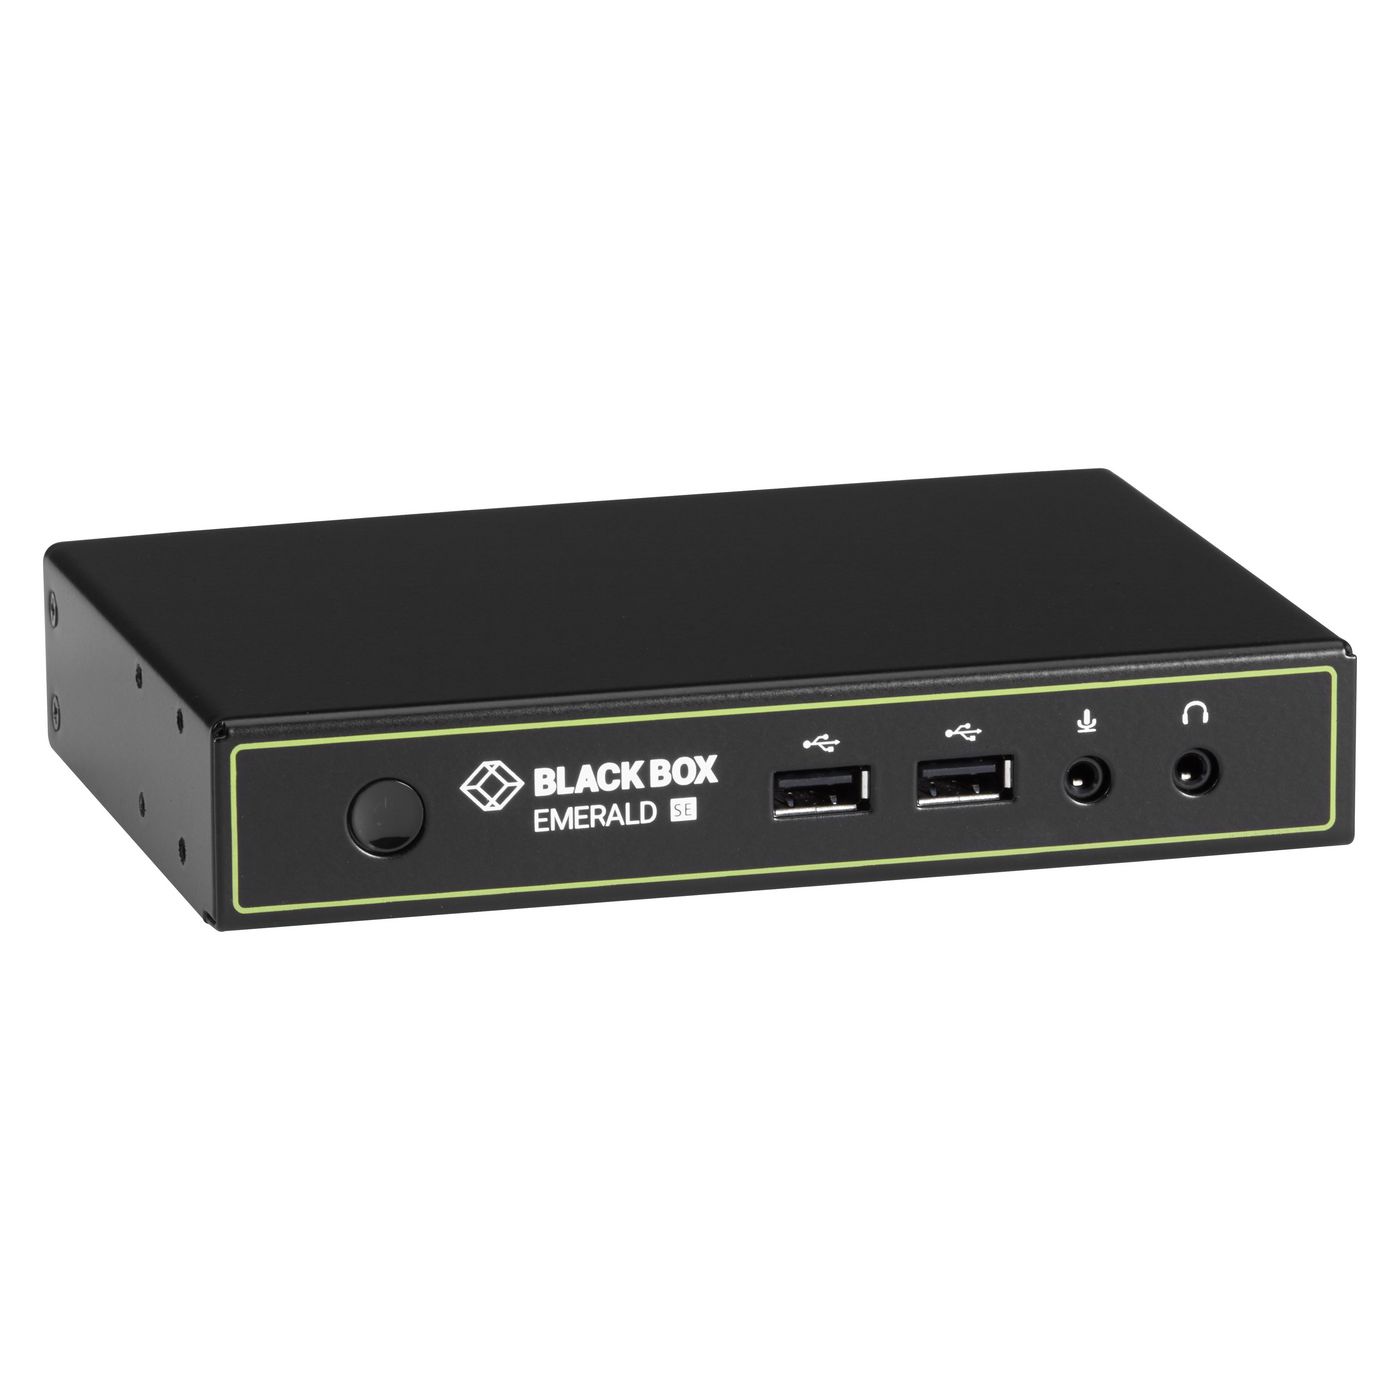 Black-Box EMD2000SE-R W126111470 EMERALD SE, HD DVI, SINGLE 